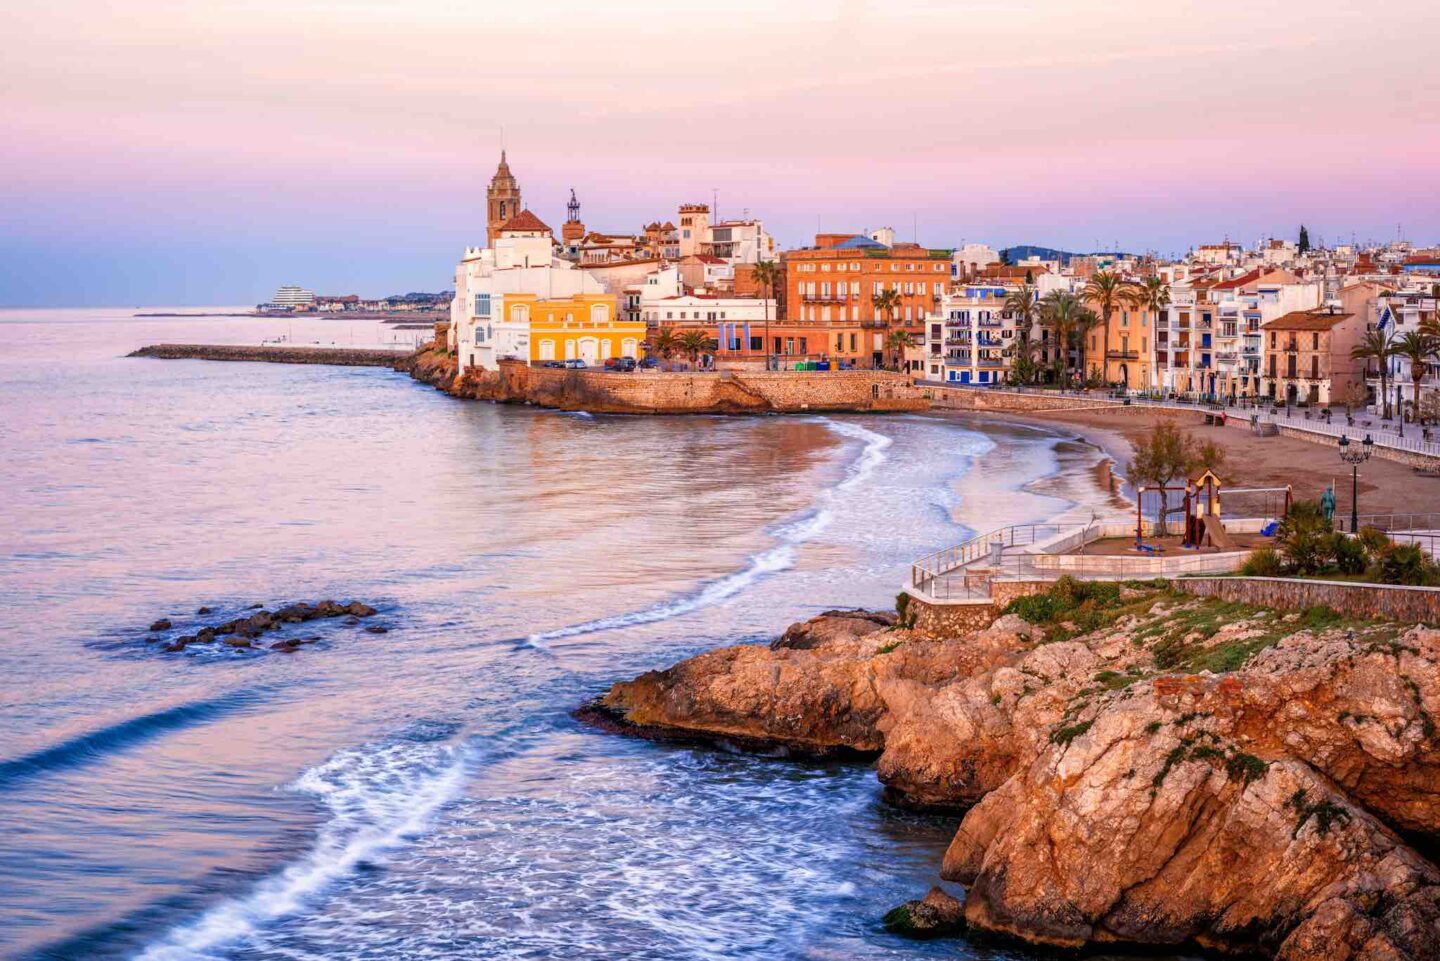 Sitges coastal town in Spain